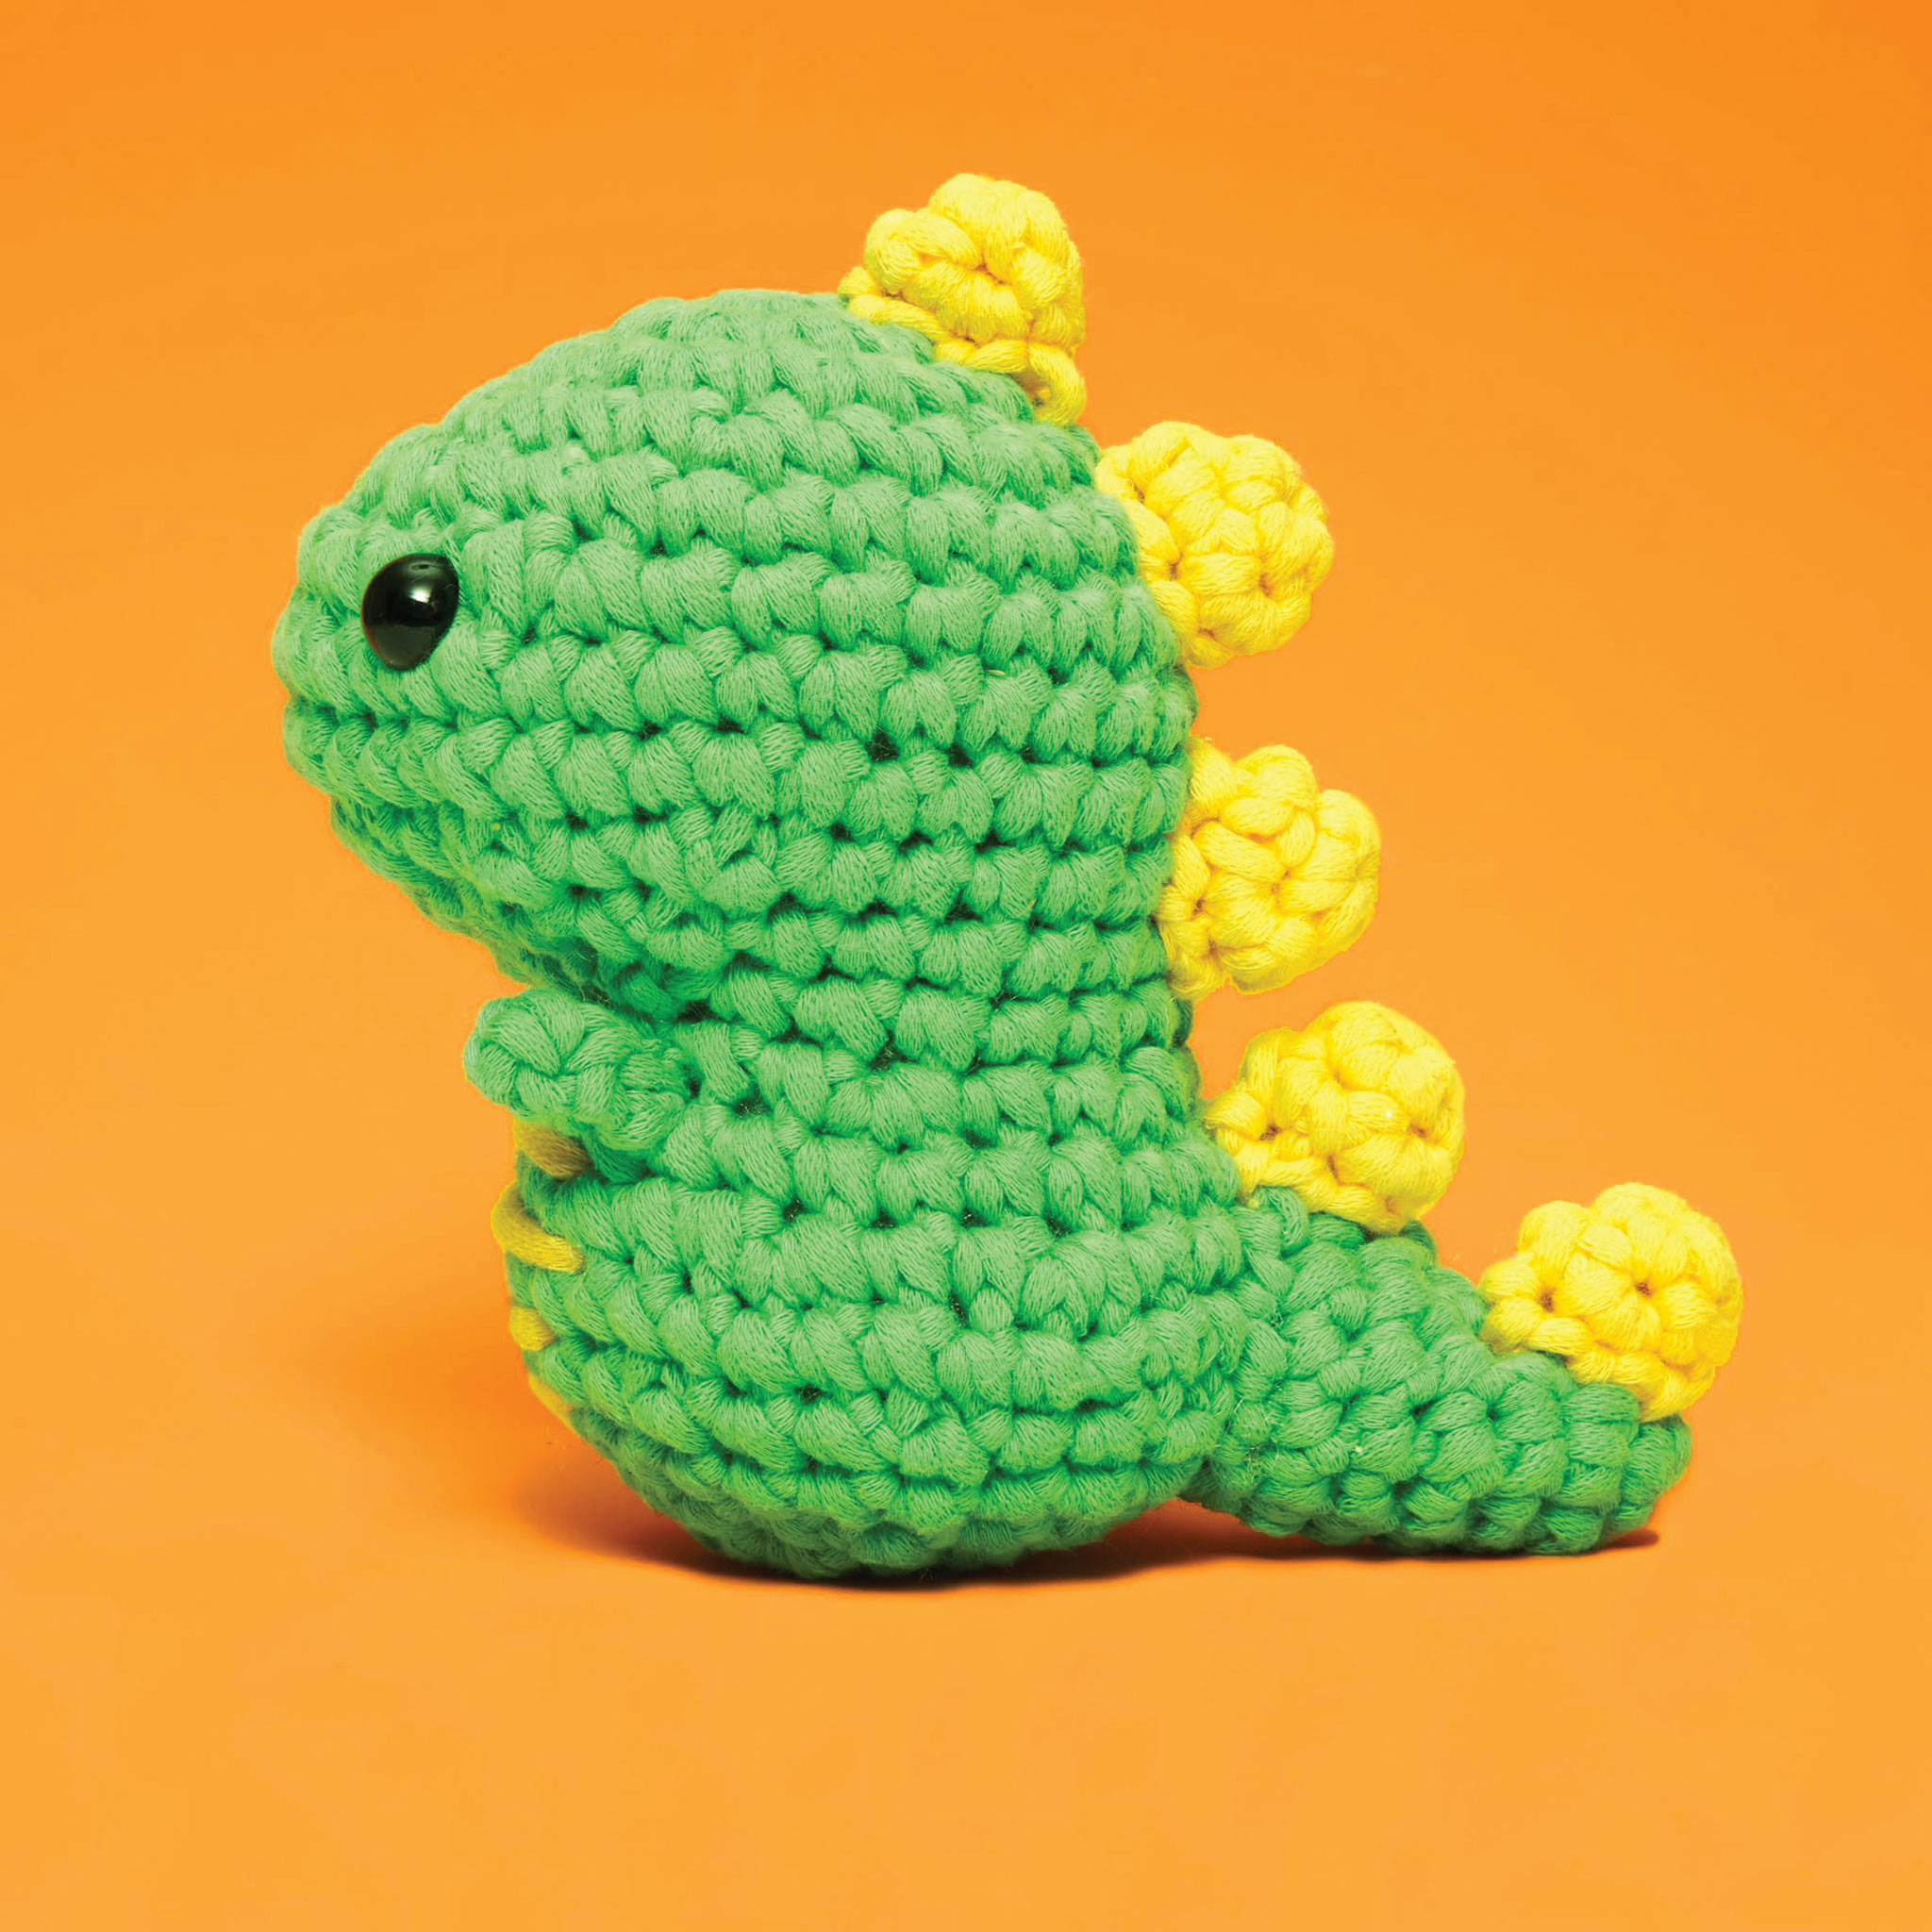 The Woobles Beginner Crochet Amigurumi Kits, BLICK Art Materials